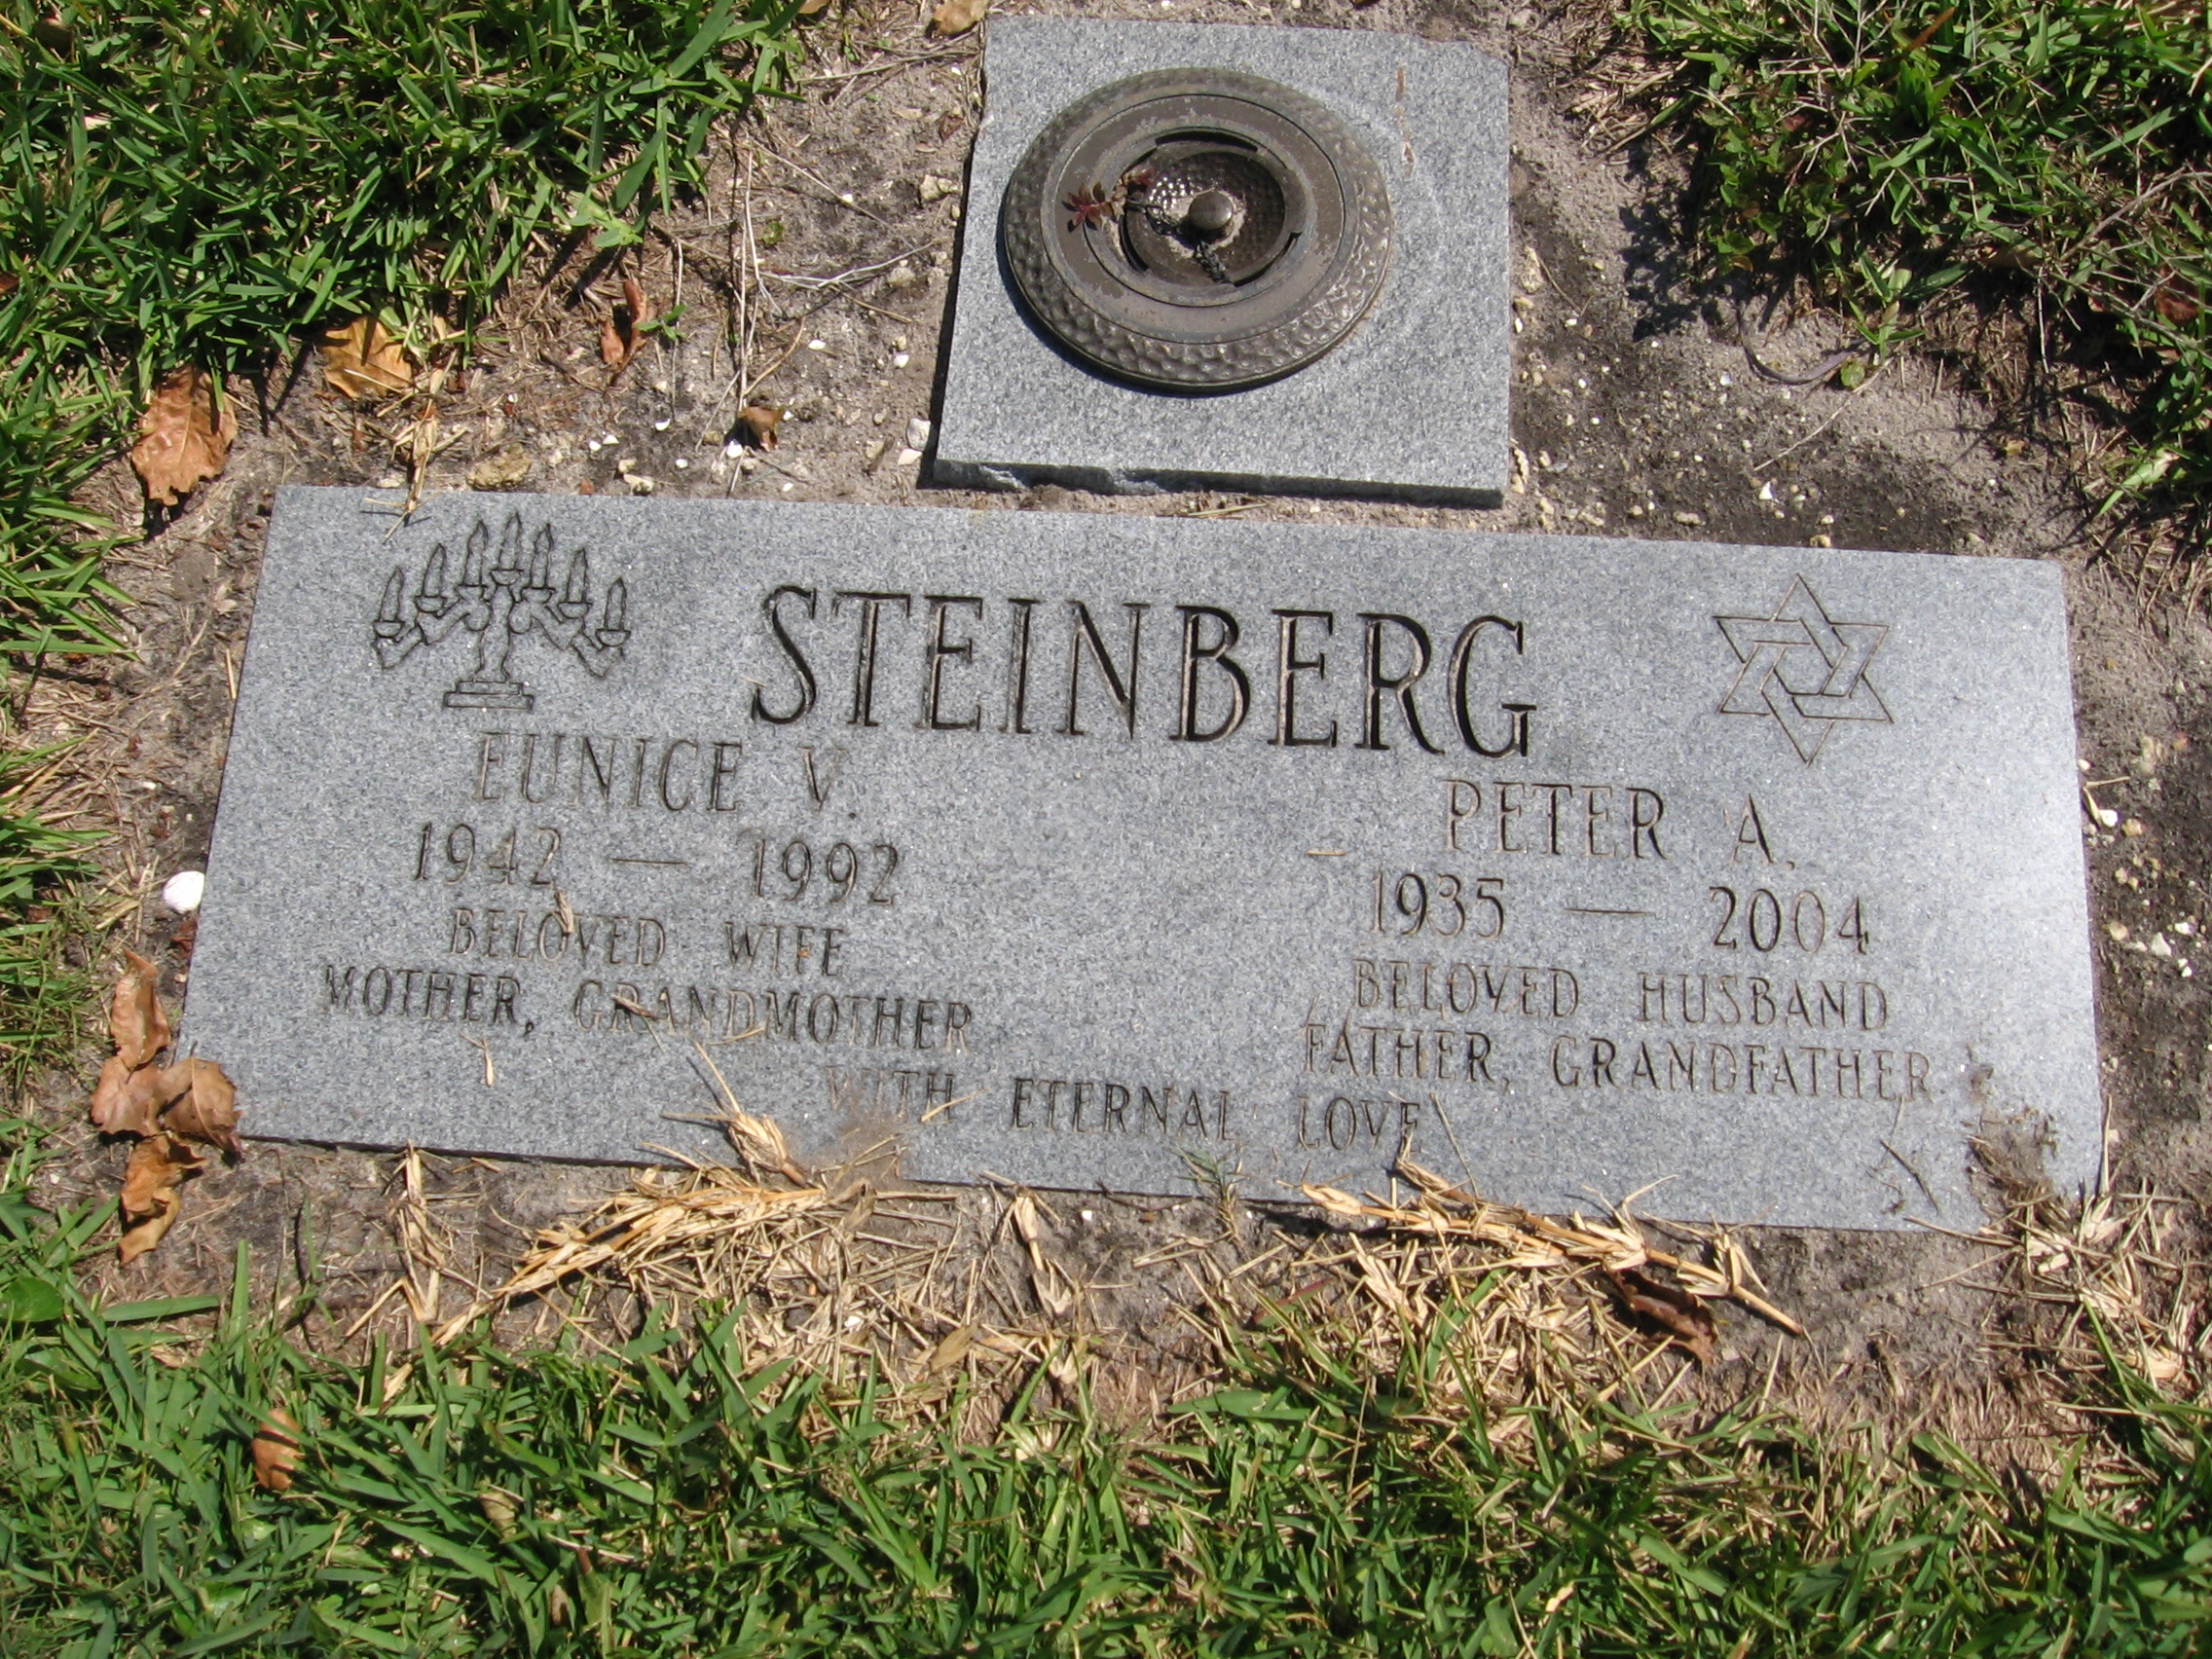 Peter A Steinberg